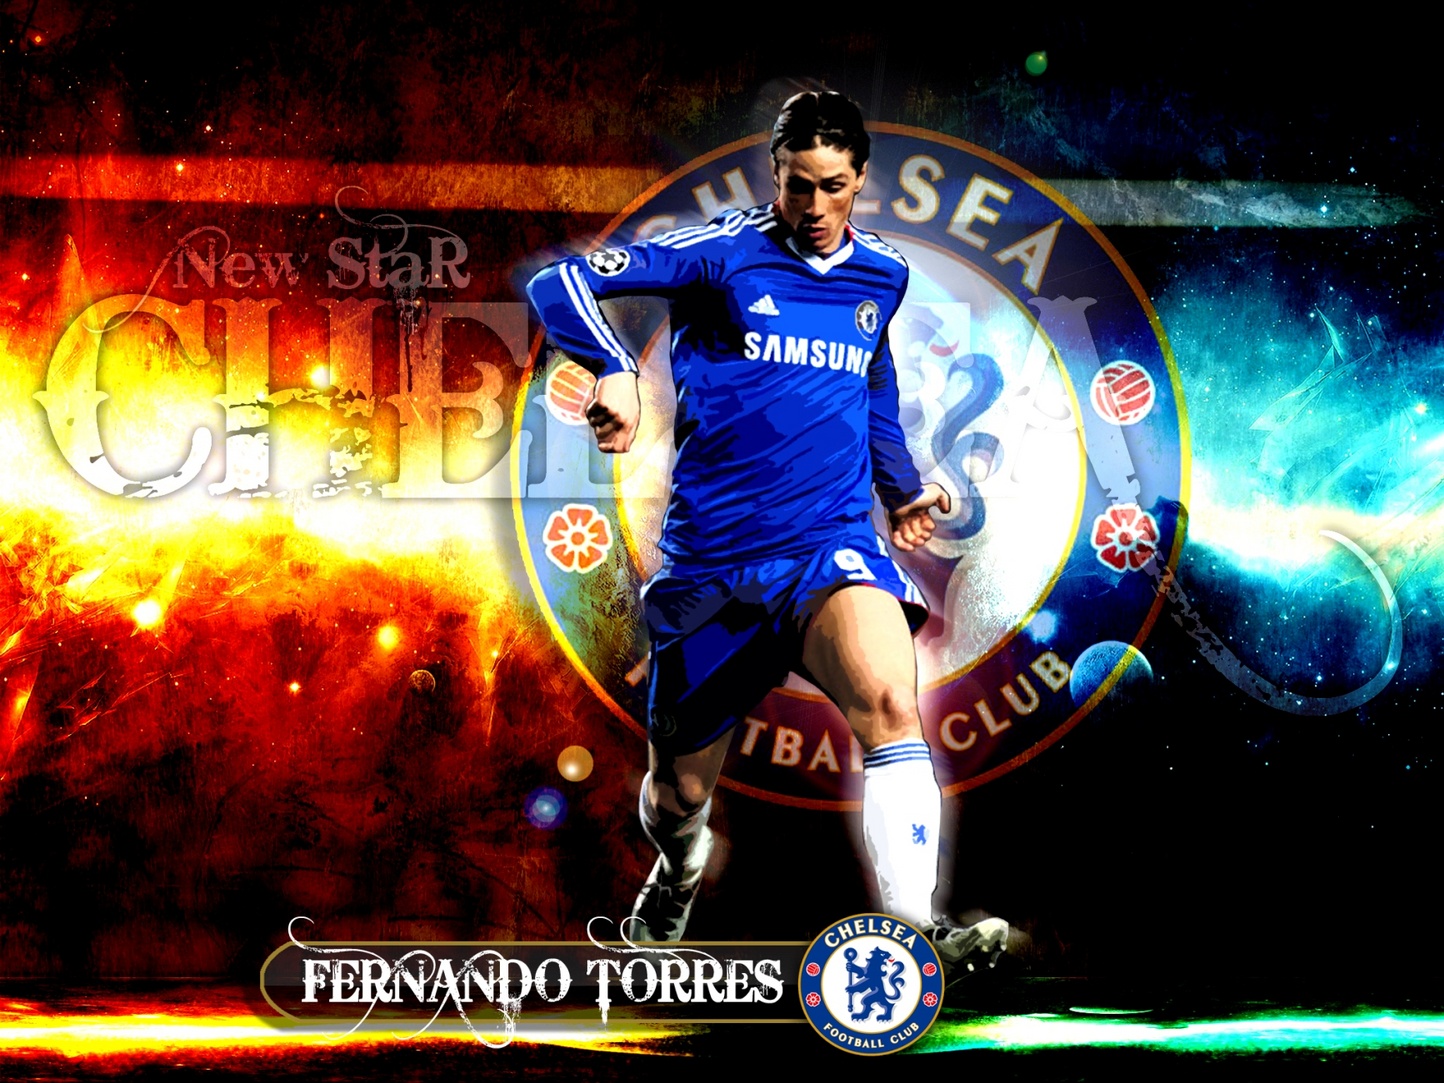 Fernando Torres Chelsea Wallpaper Jpg